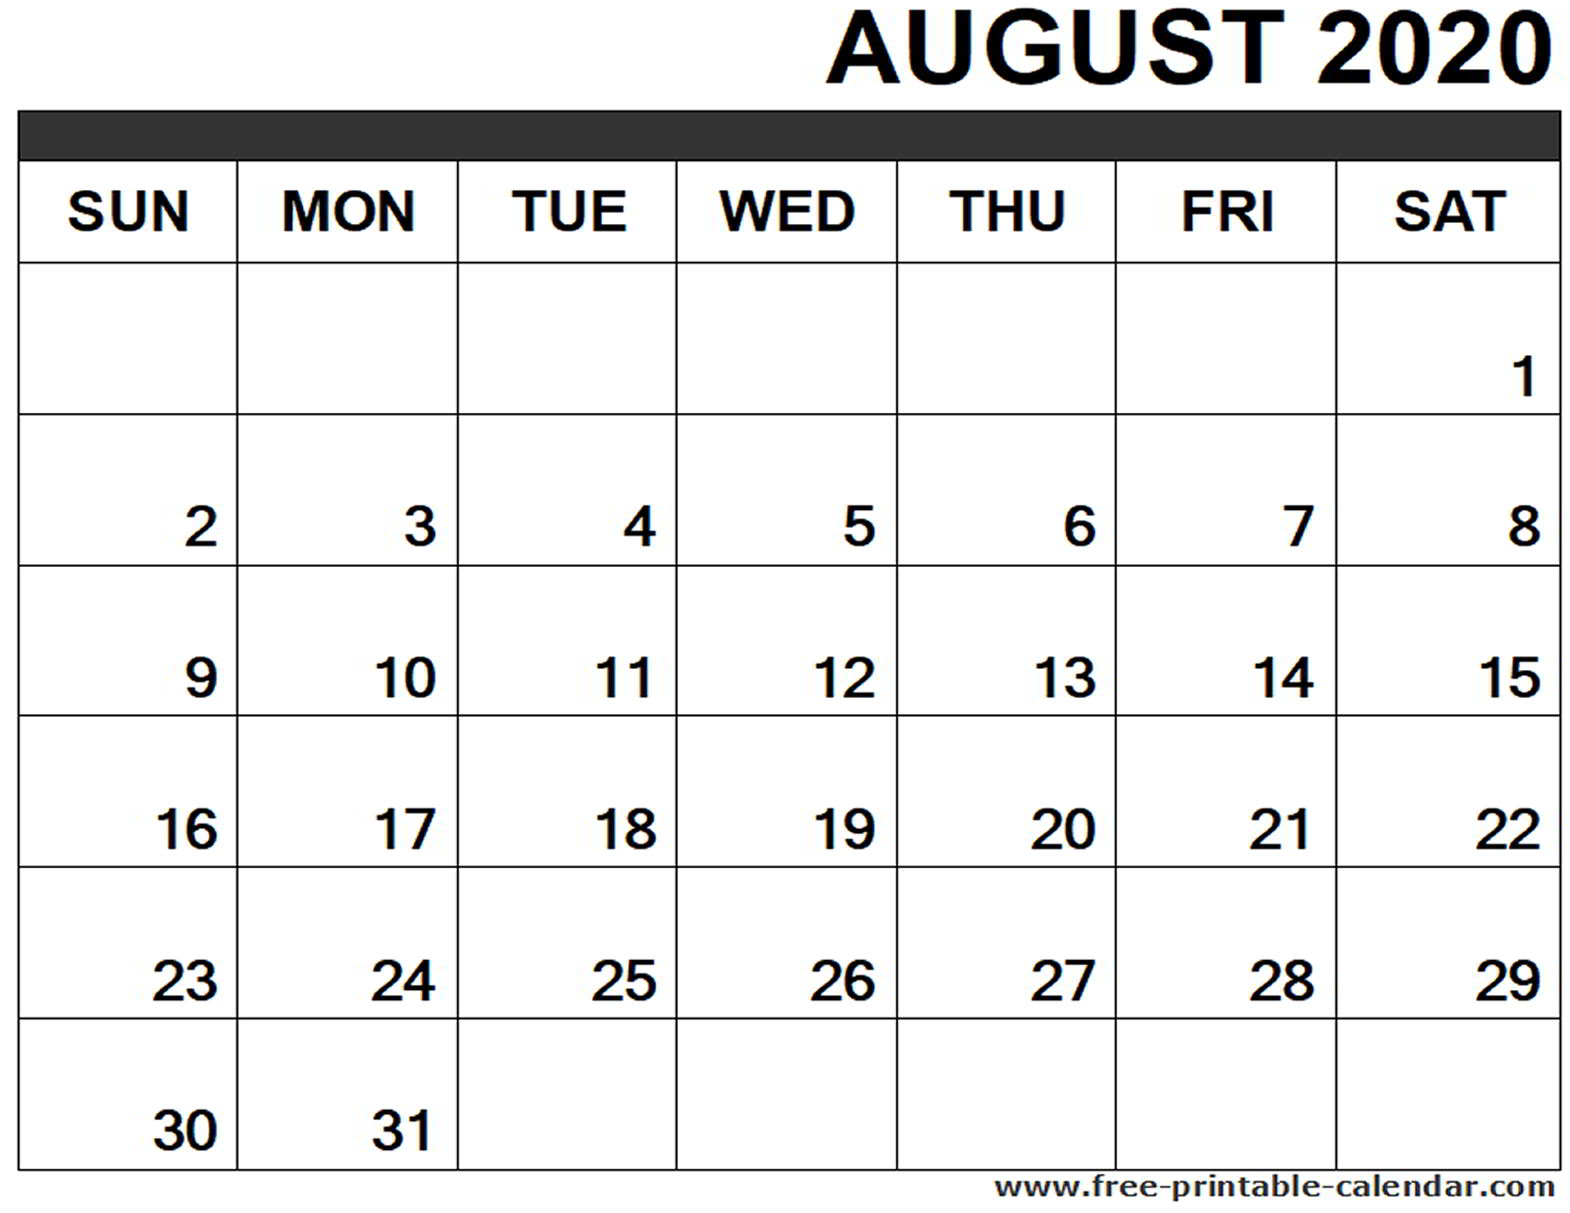 August 2020 Calendar Printable  Freeprintablecalendar inside July And August 2020 Calendar Printable